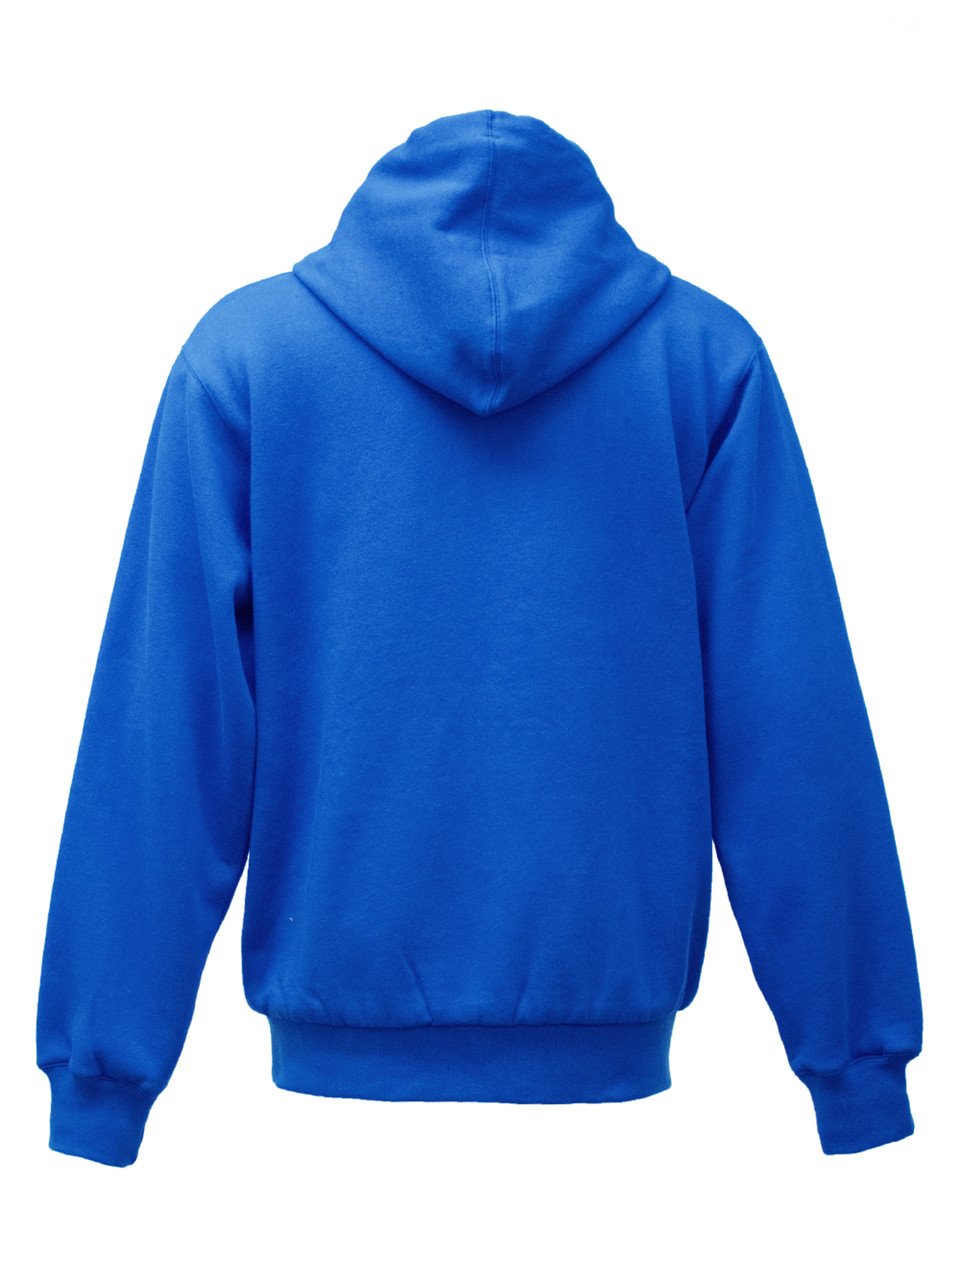 RefrigiWear 0487 Thermal Zipper Work Sweatshirt - with Hood, 2